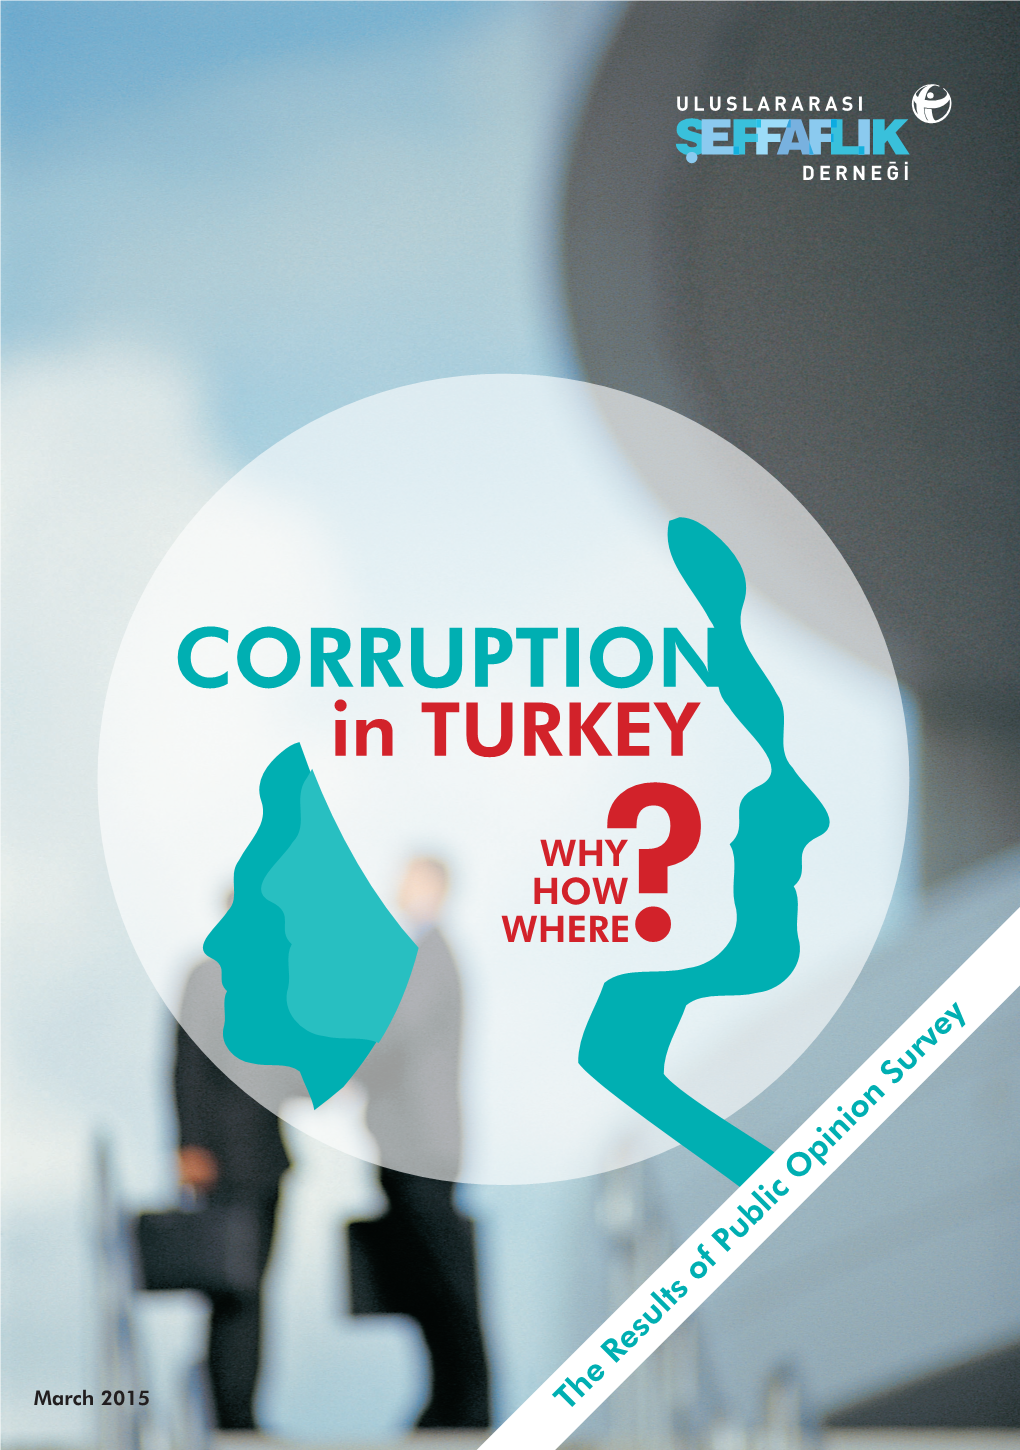 The Results of Public Opinion Survey TI-Turkey (Uluslararası Şeffaflik Derneği) Was Founded in 2008 by Voluntary Efforts